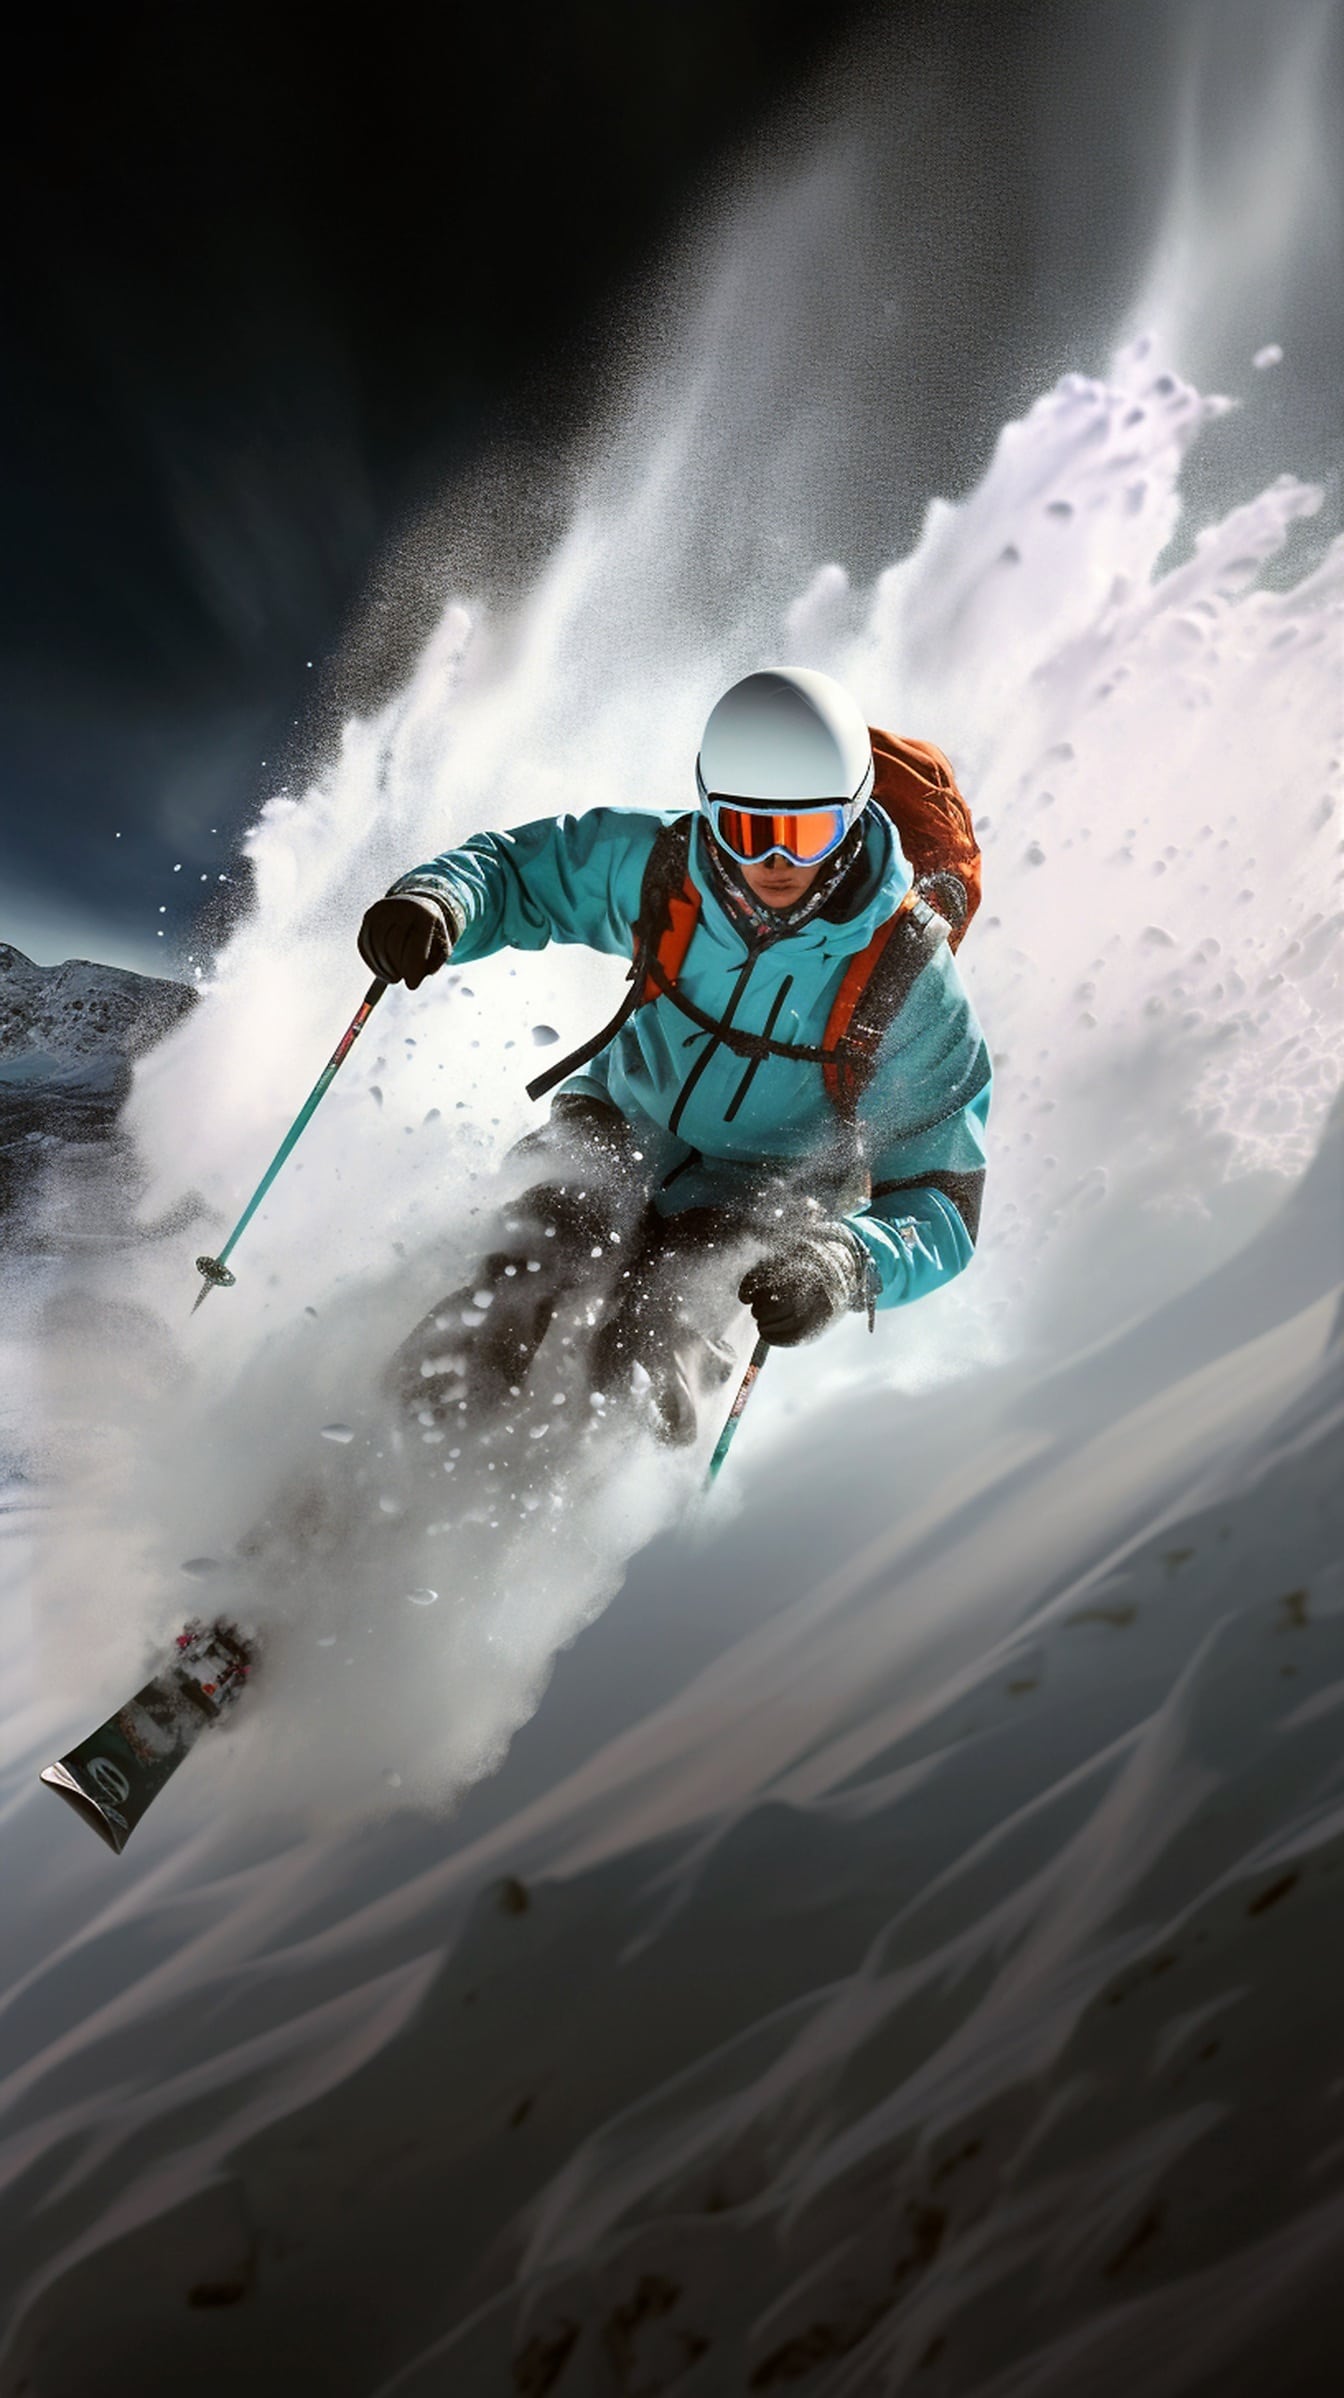 Tampilan close-up ski pemain ski olahraga ekstrim di snowy mountain